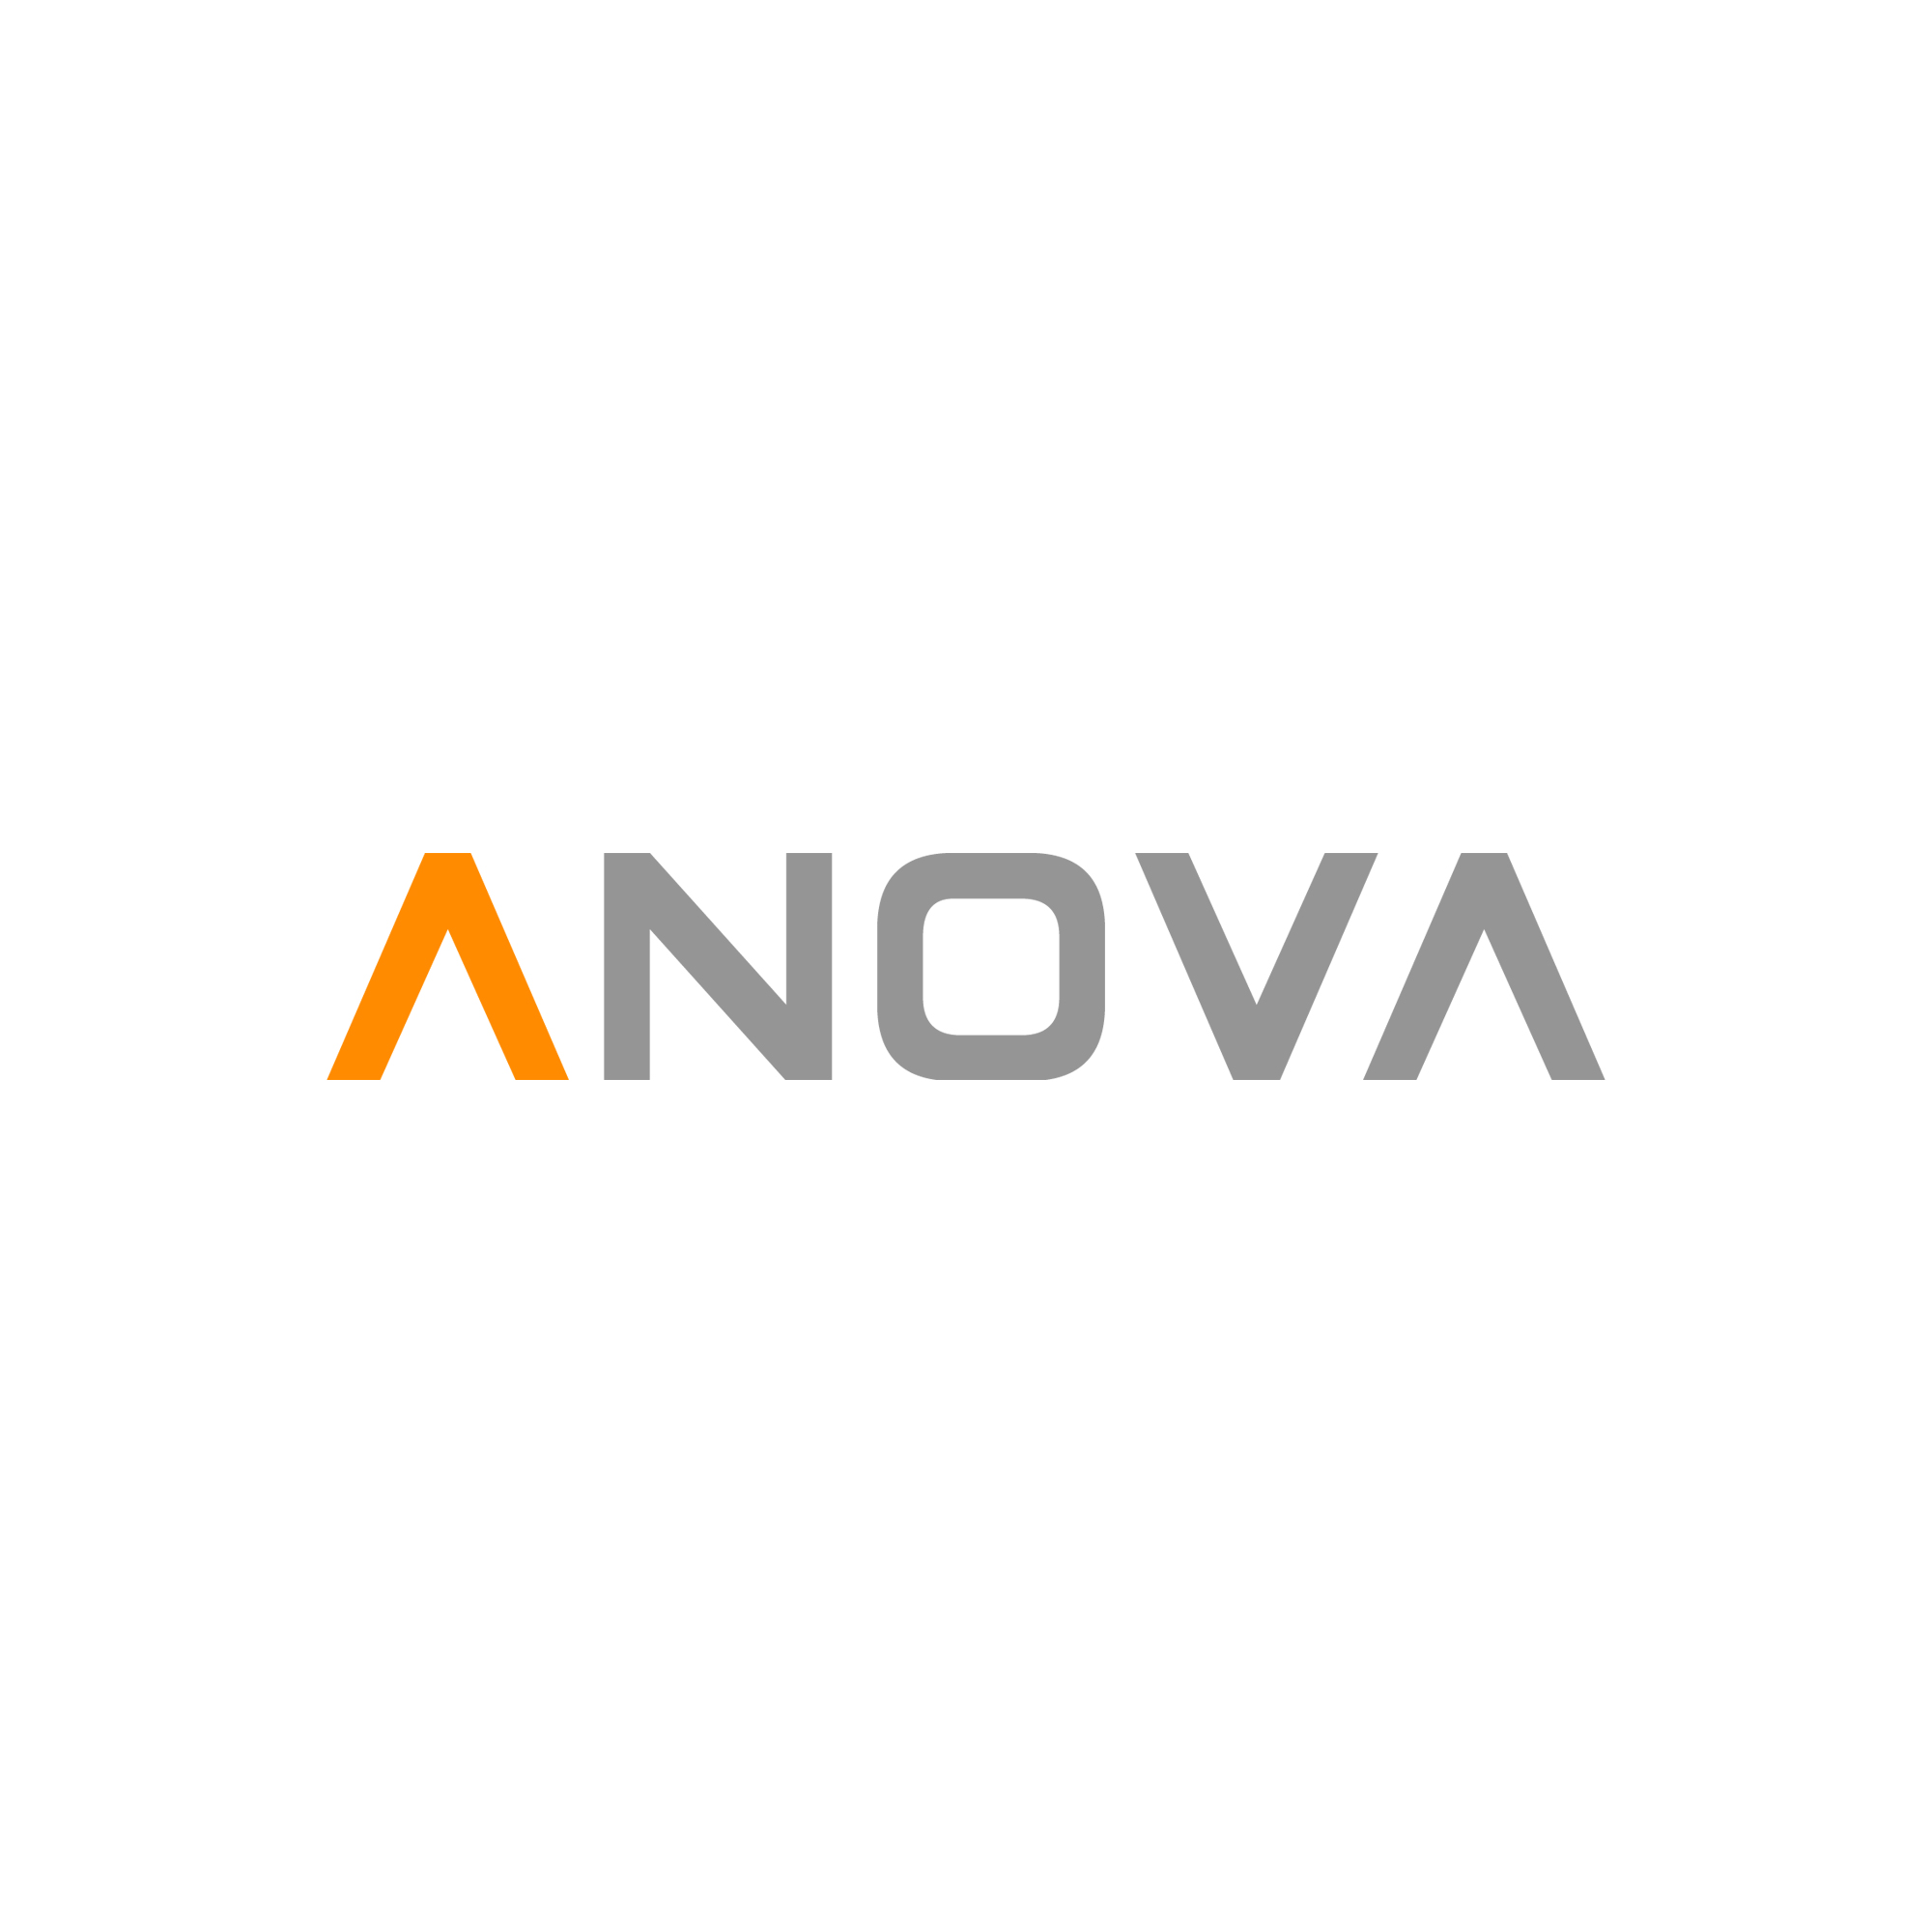 Anova Applied Electronics, Inc.